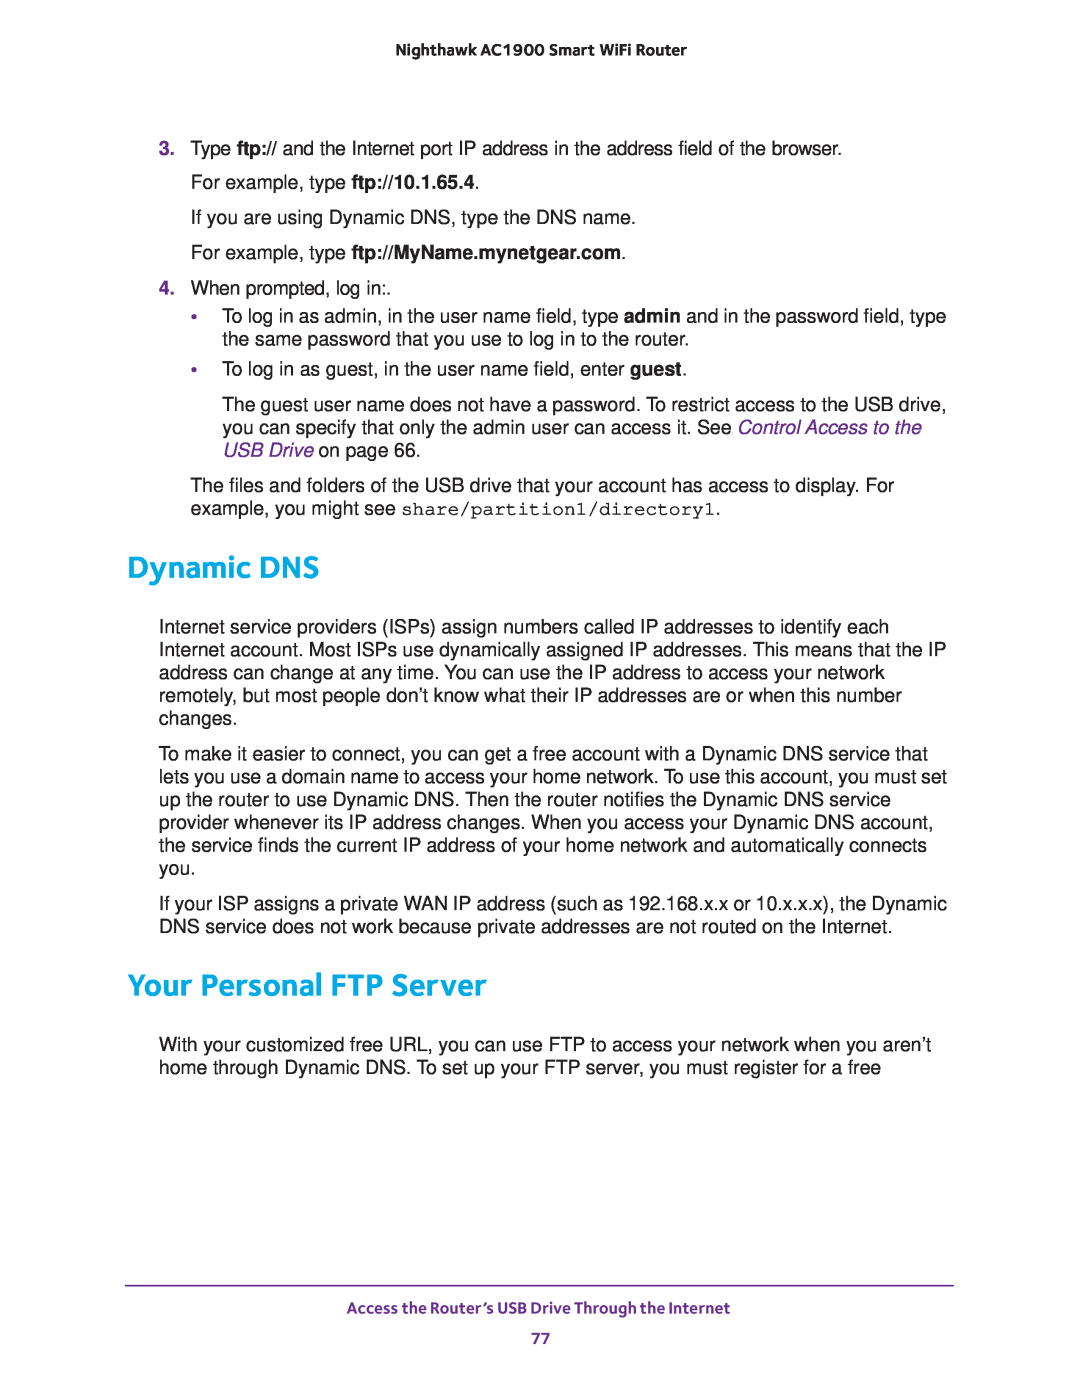 NETGEAR Model R7000 user manual Dynamic DNS, Your Personal FTP Server 